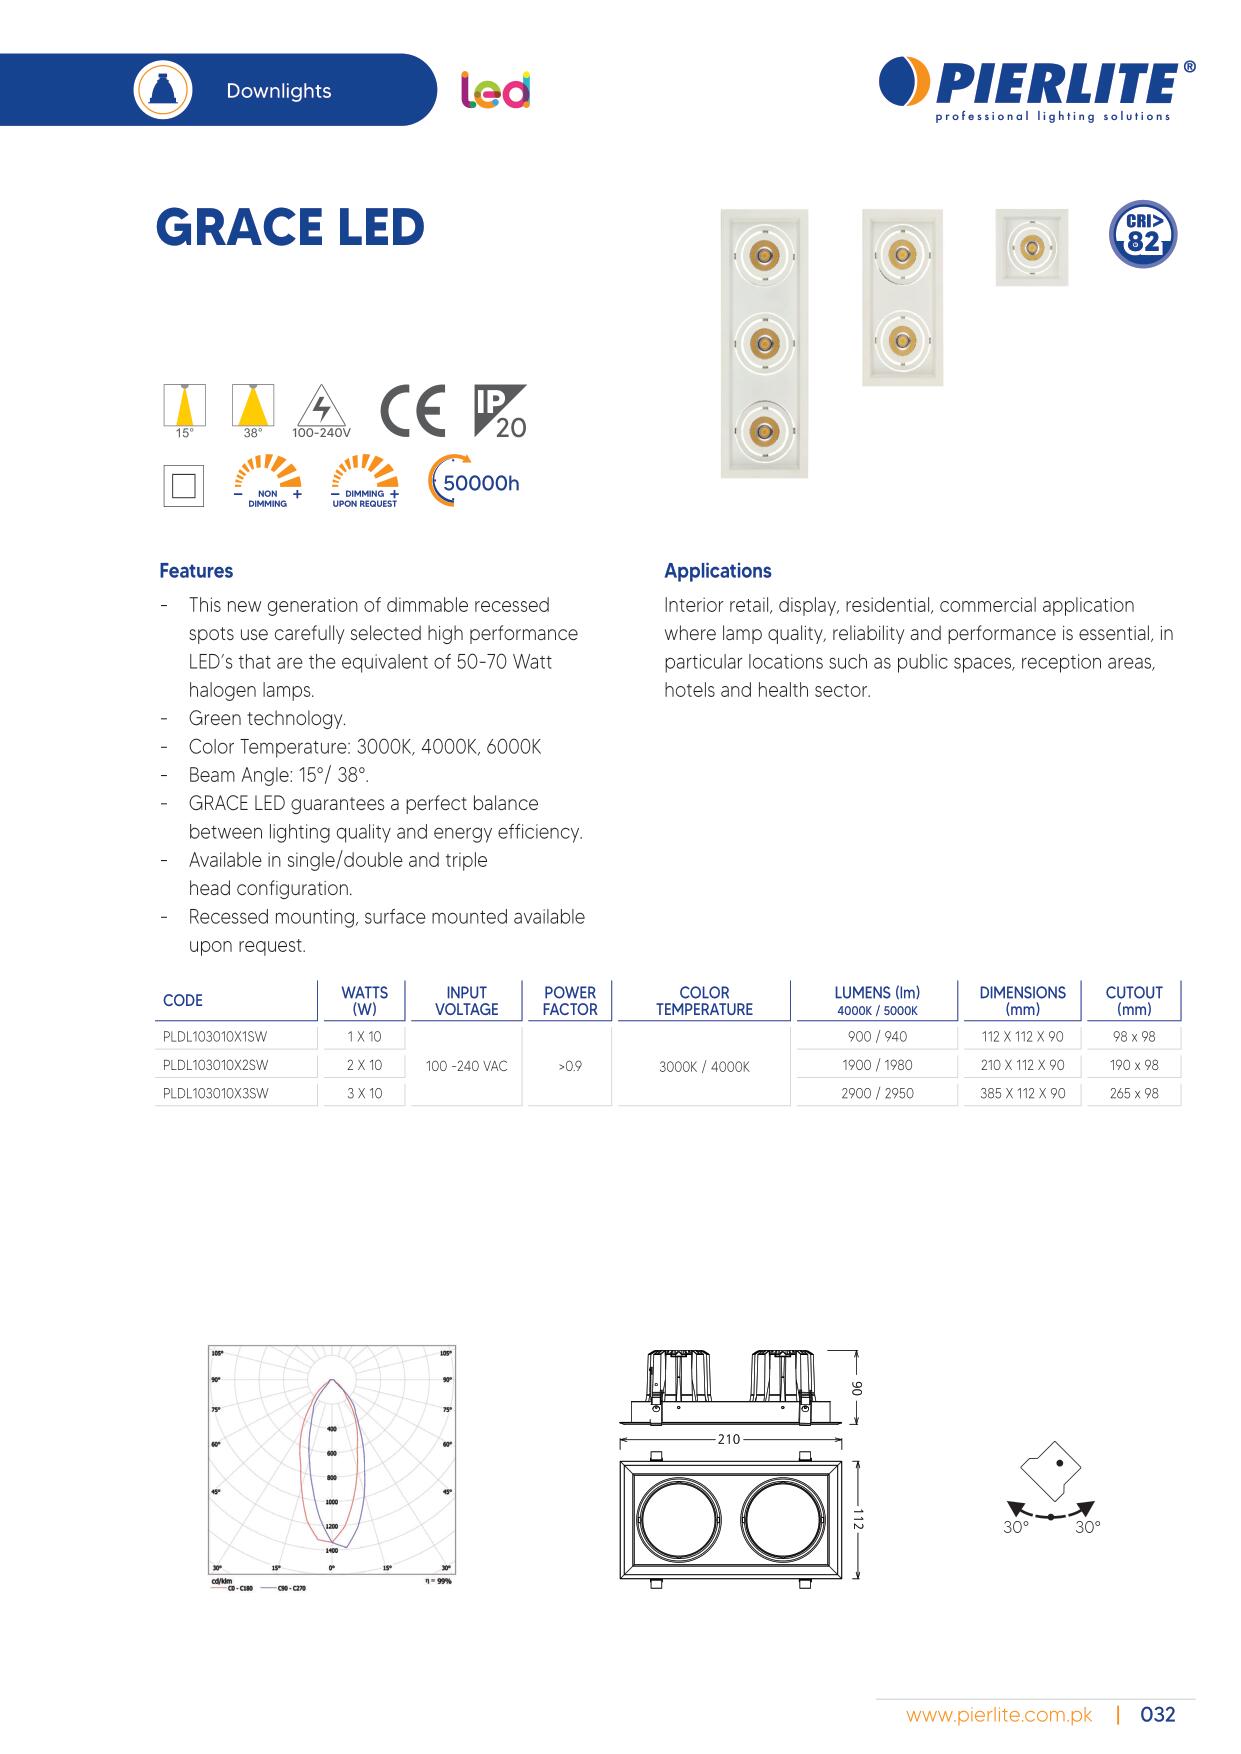 Pierlite LED Luminaire Catalog 2021-41